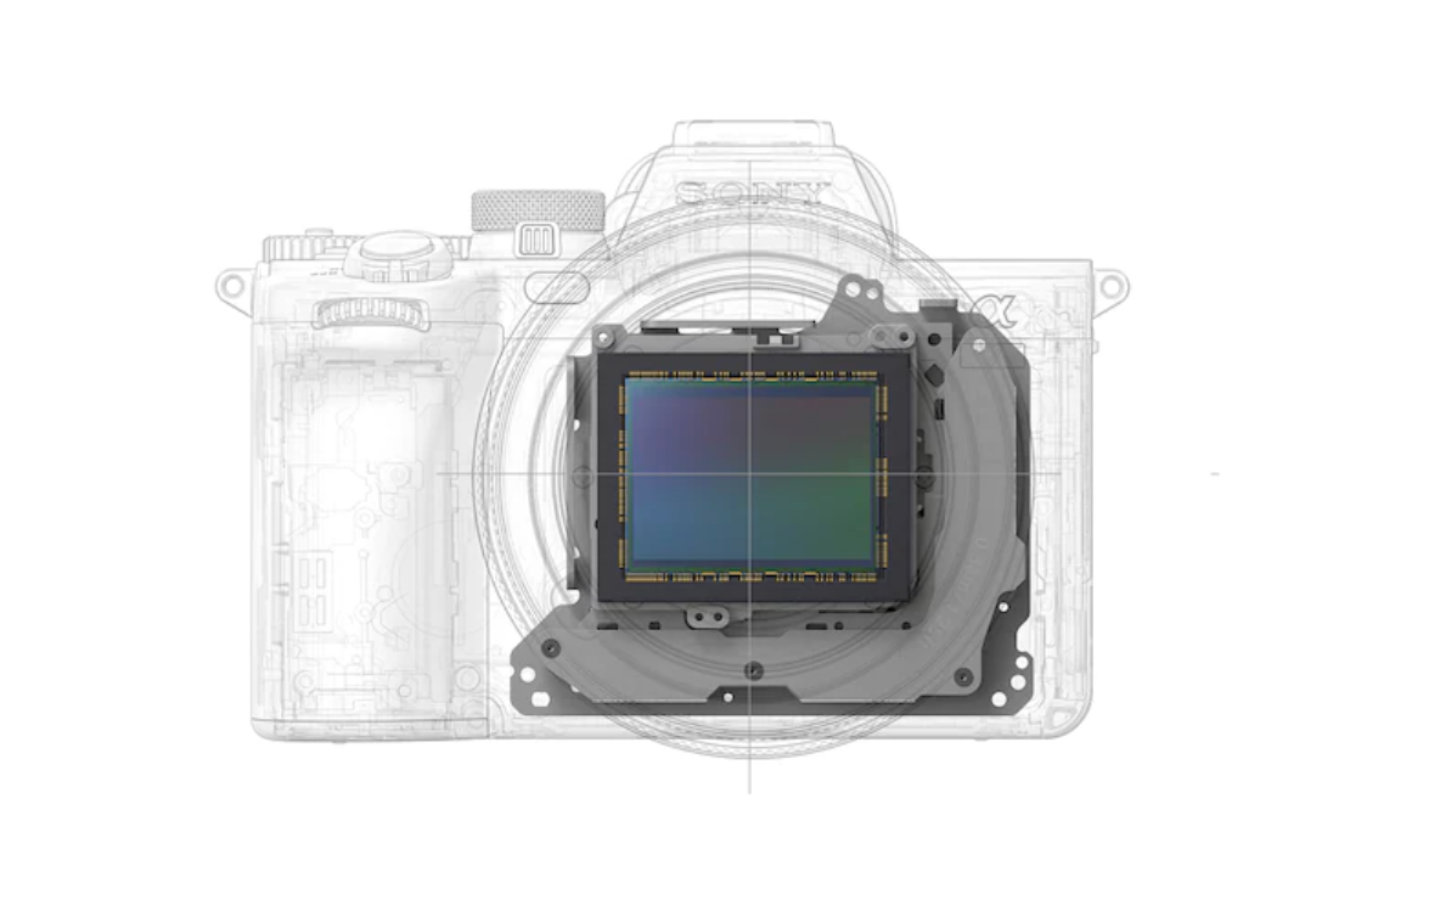 Sony 新款無反單眼相機 α7 IV 亮相！具備 33MP 感光元件和旗艦級的 BIONZ XR 處理器，終於有全翻轉螢幕了！